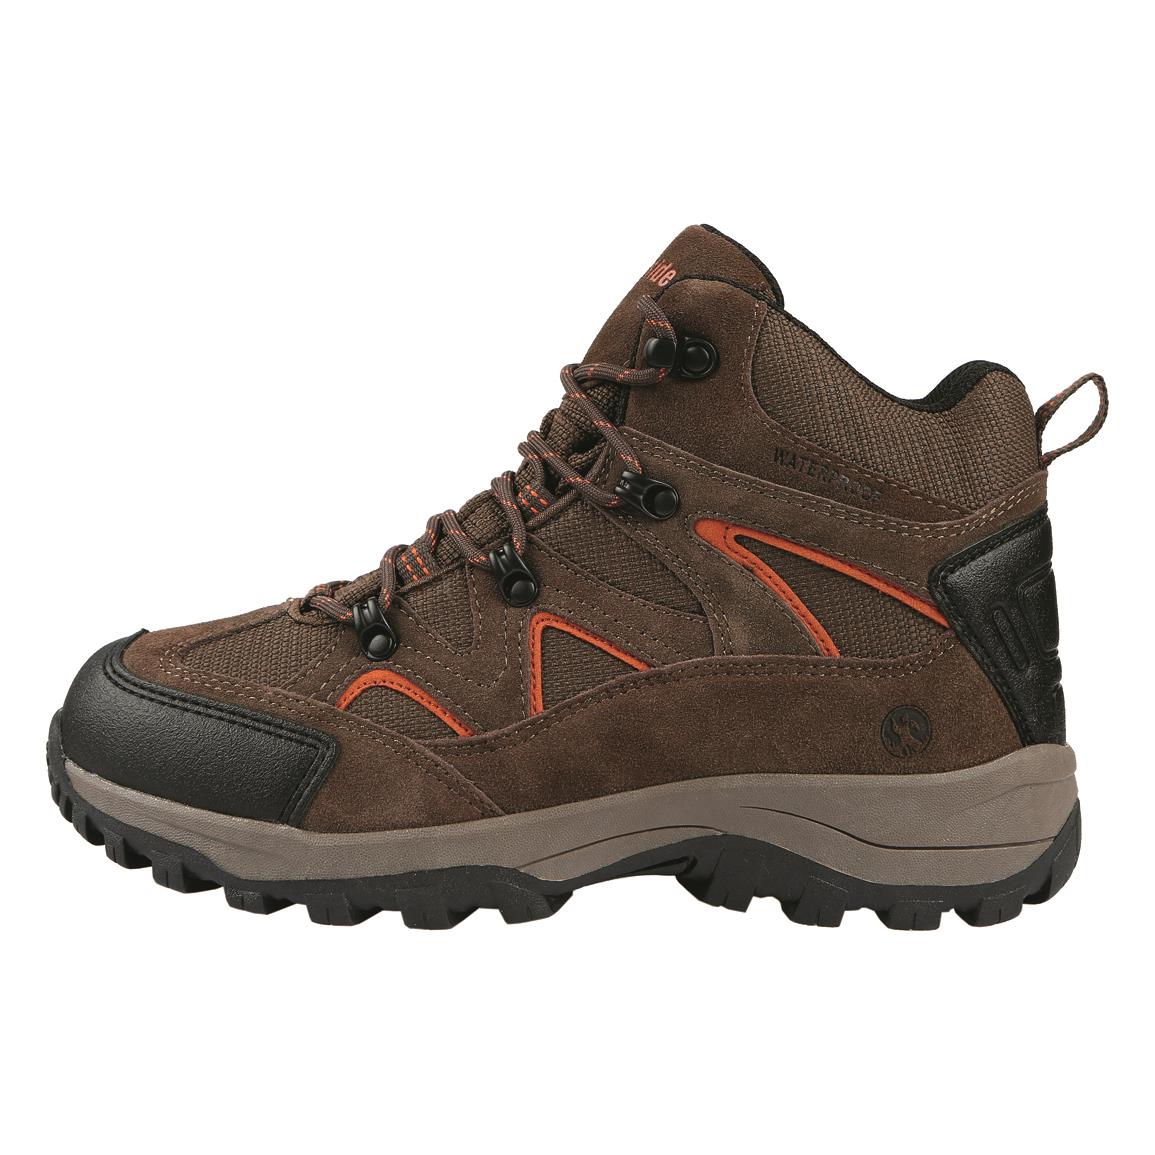 Northside Men's Snohomish Waterproof Mid Hiking Boots - 622035, Hiking ...